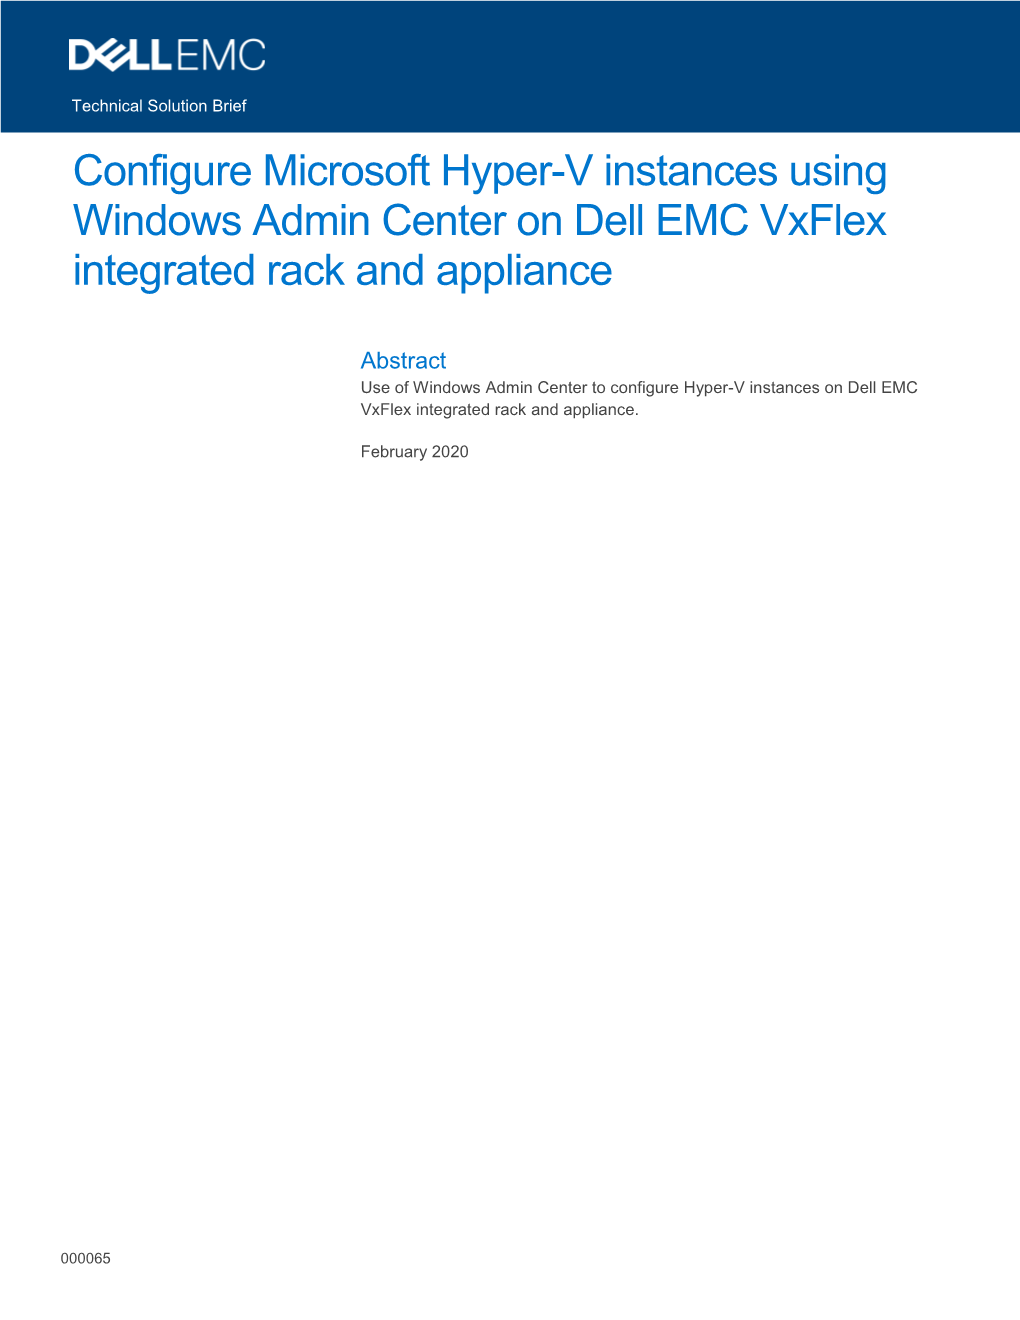 Configure Microsoft Hyper-V Instances Using Windows Admin Center on Dell EMC Vxflex Integrated Rack and Appliance